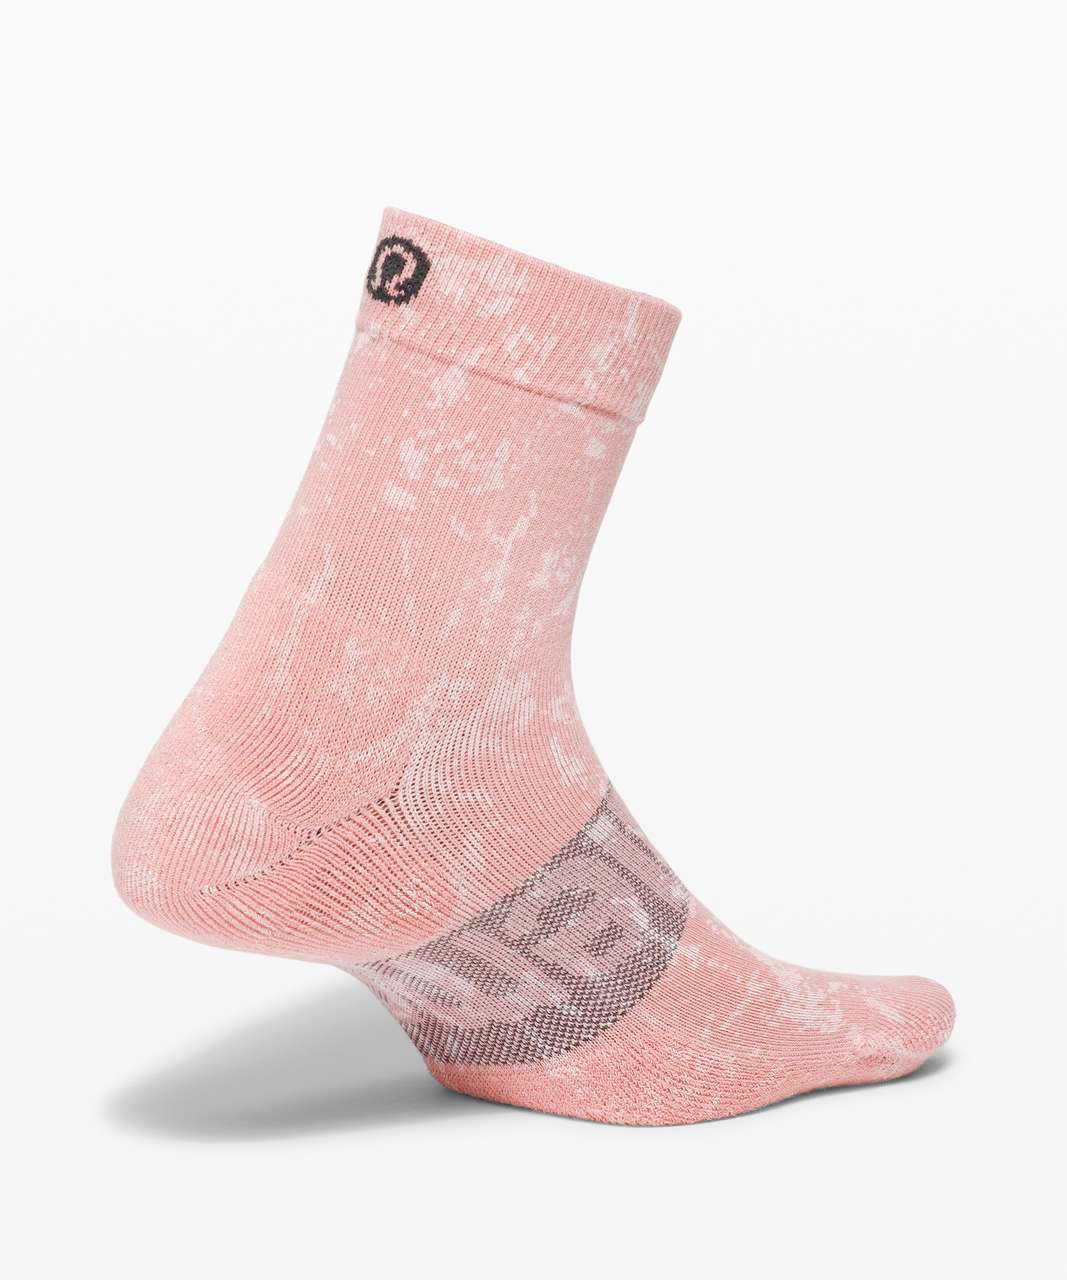 Lululemon Daily Stride Mid Crew Sock *Ice Dye - Pink Puff / White